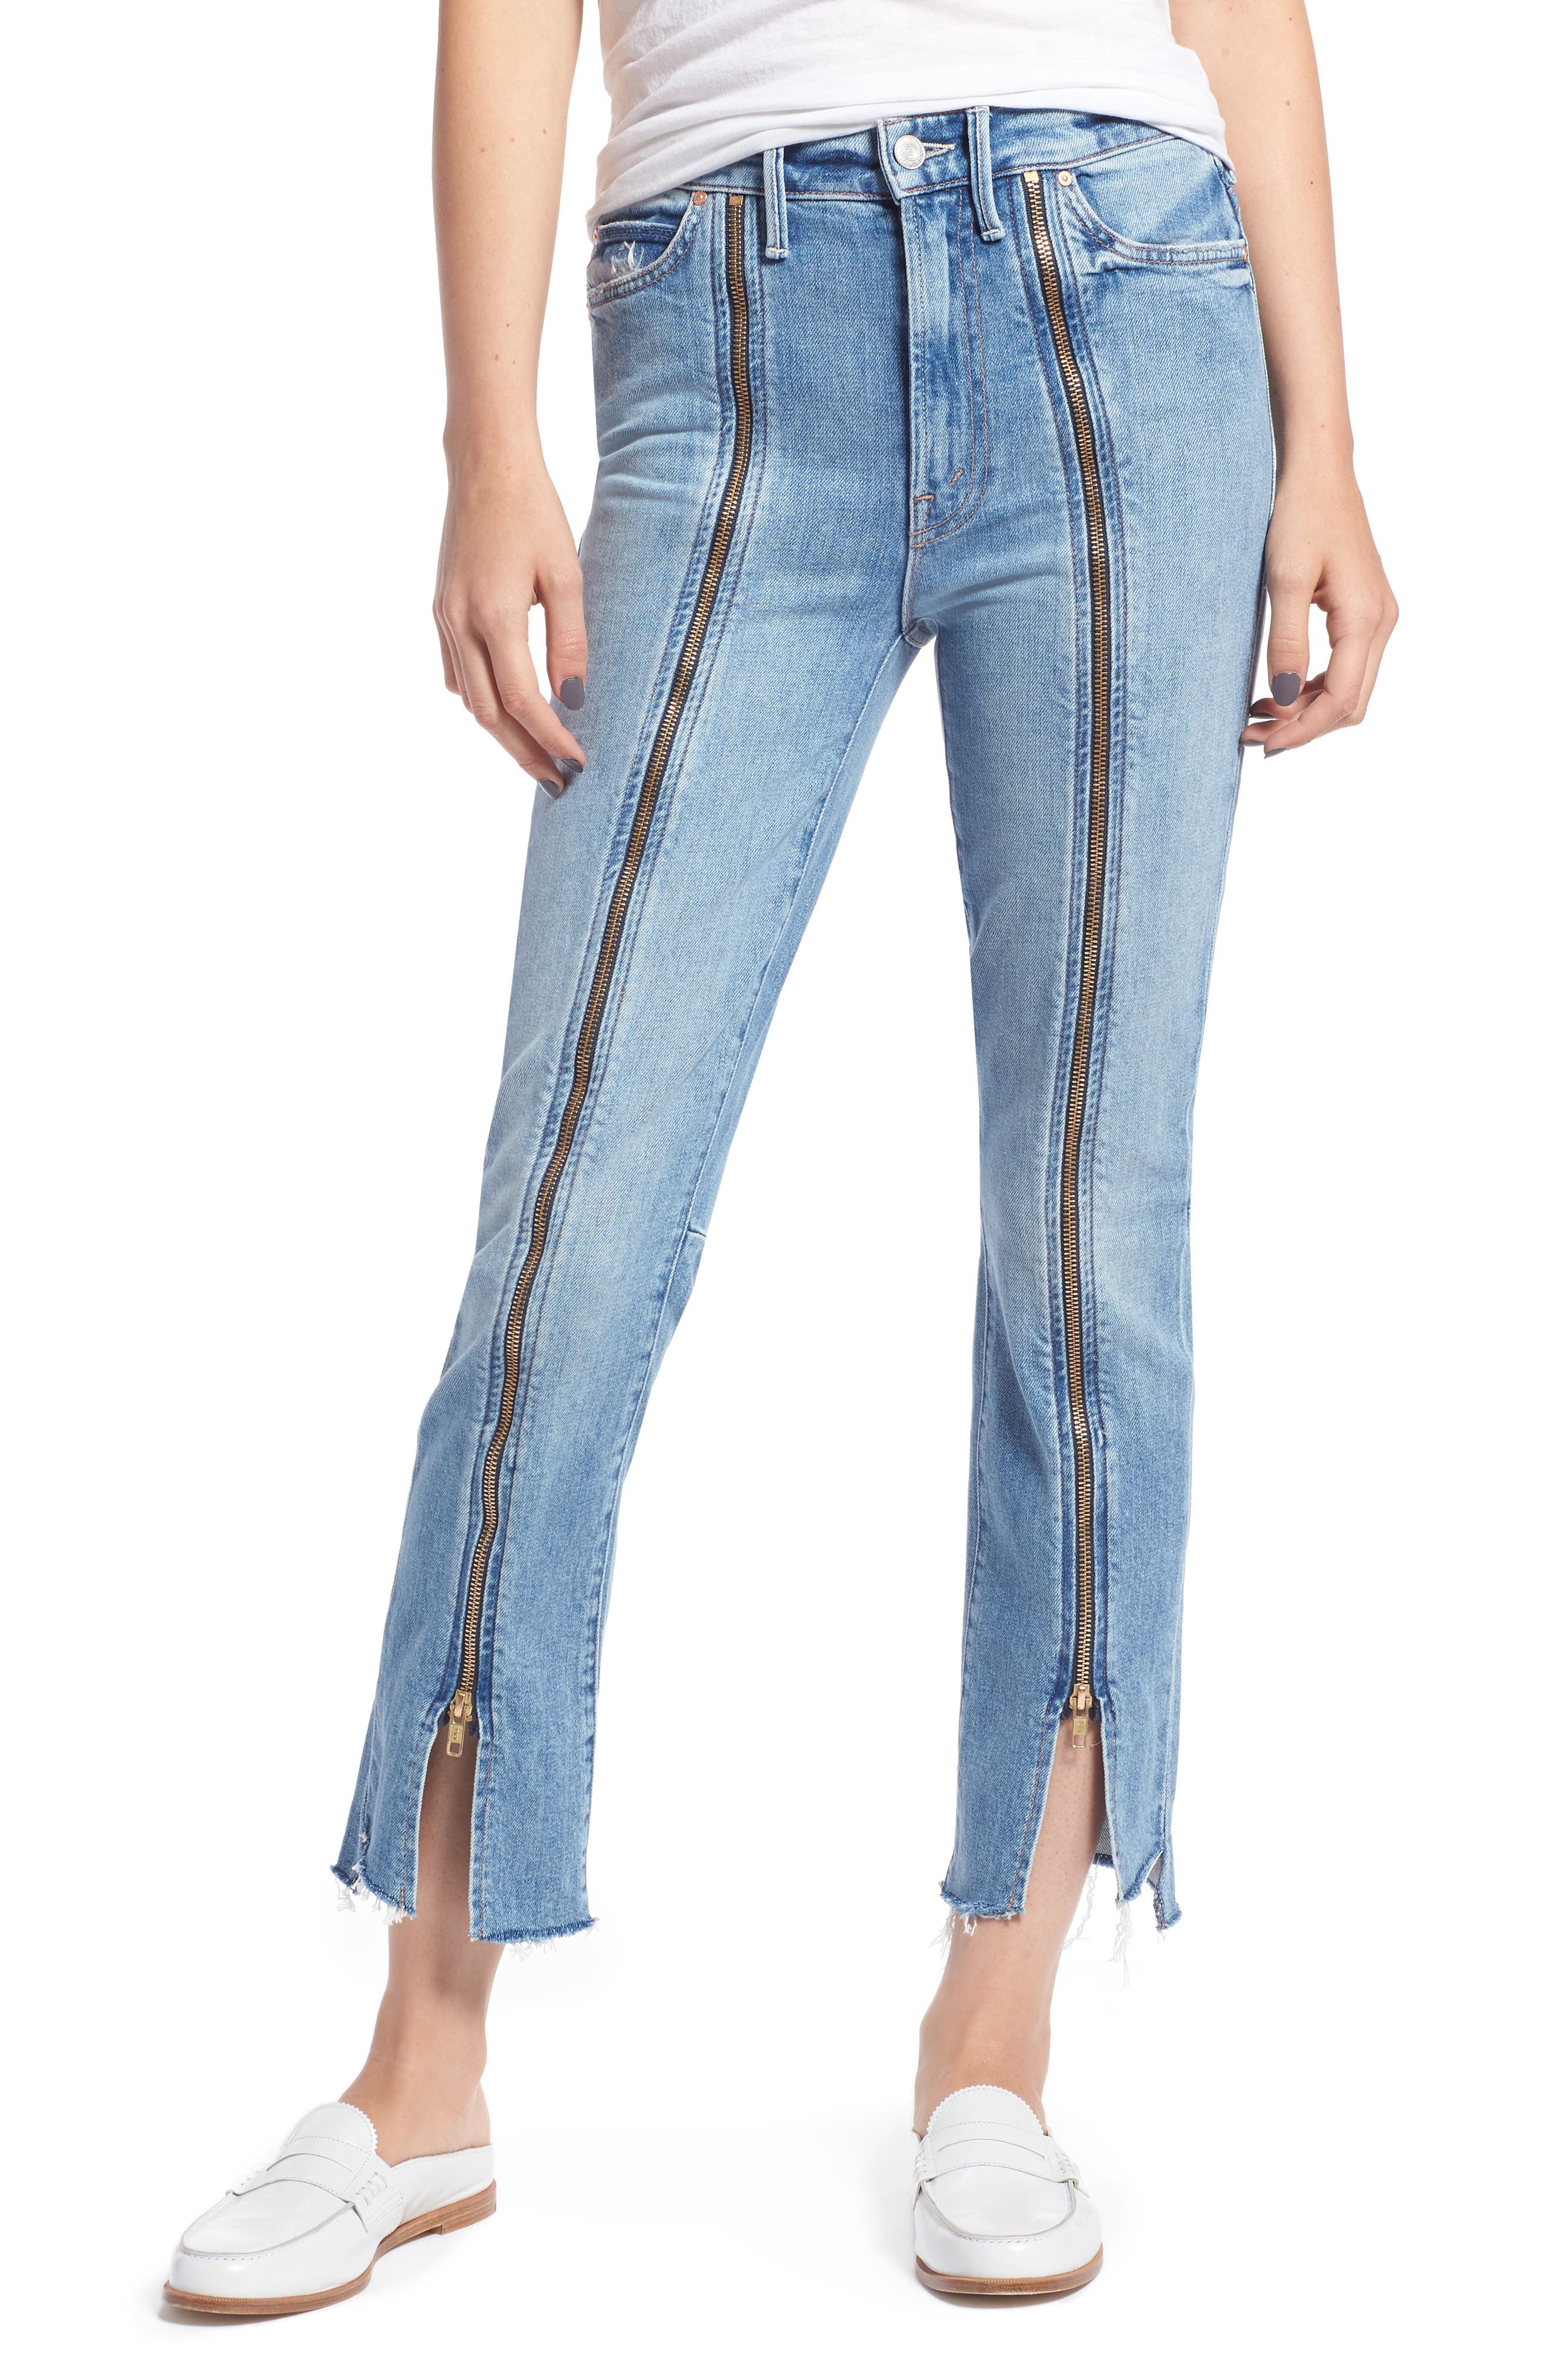 mother zipper jeans